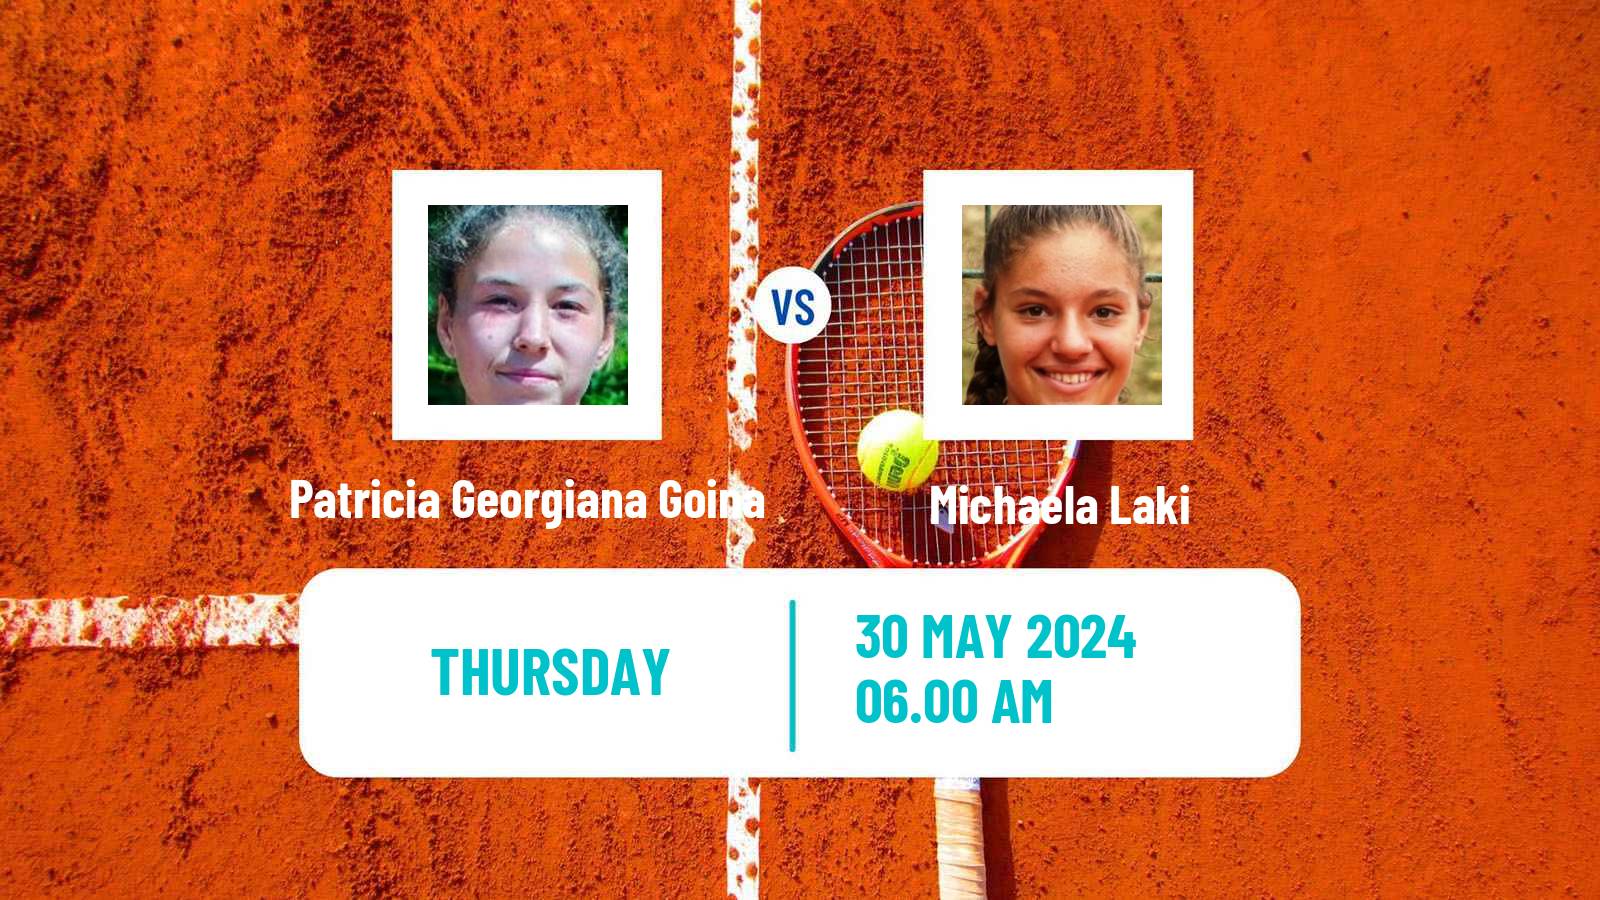 Tennis ITF W15 Kursumlijska Banja 6 Women Patricia Georgiana Goina - Michaela Laki